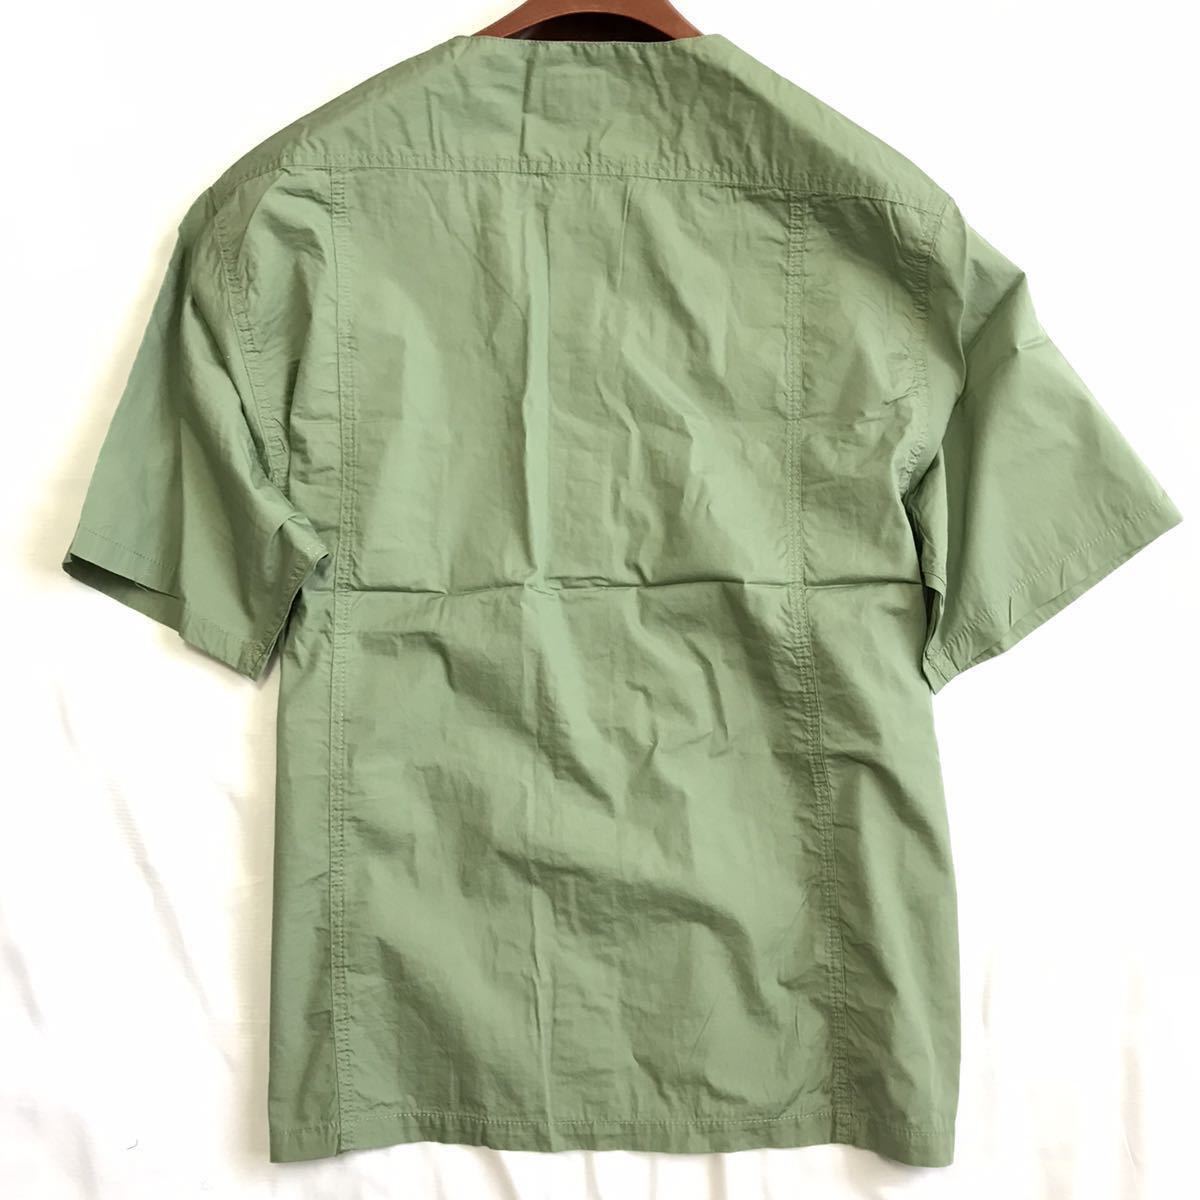 VS050 new goods [ men's L] khaki green special order United Arrows ko-enCOEN×SMITH\'S no color short sleeves shirt 